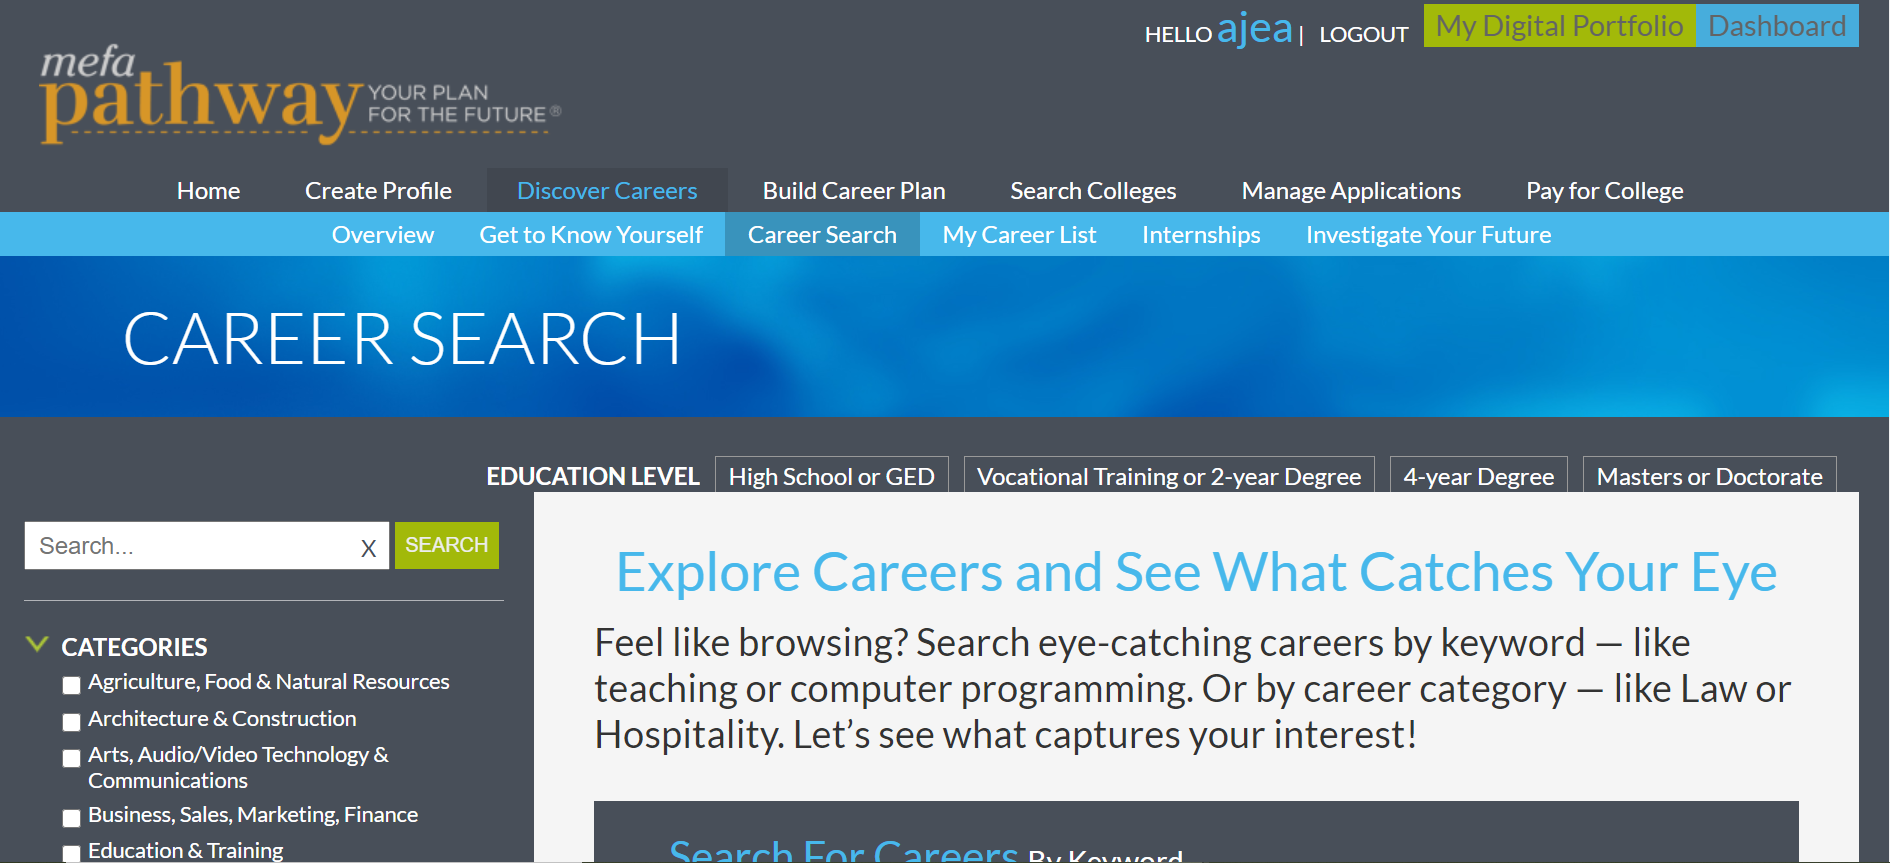 mefa pathway career search